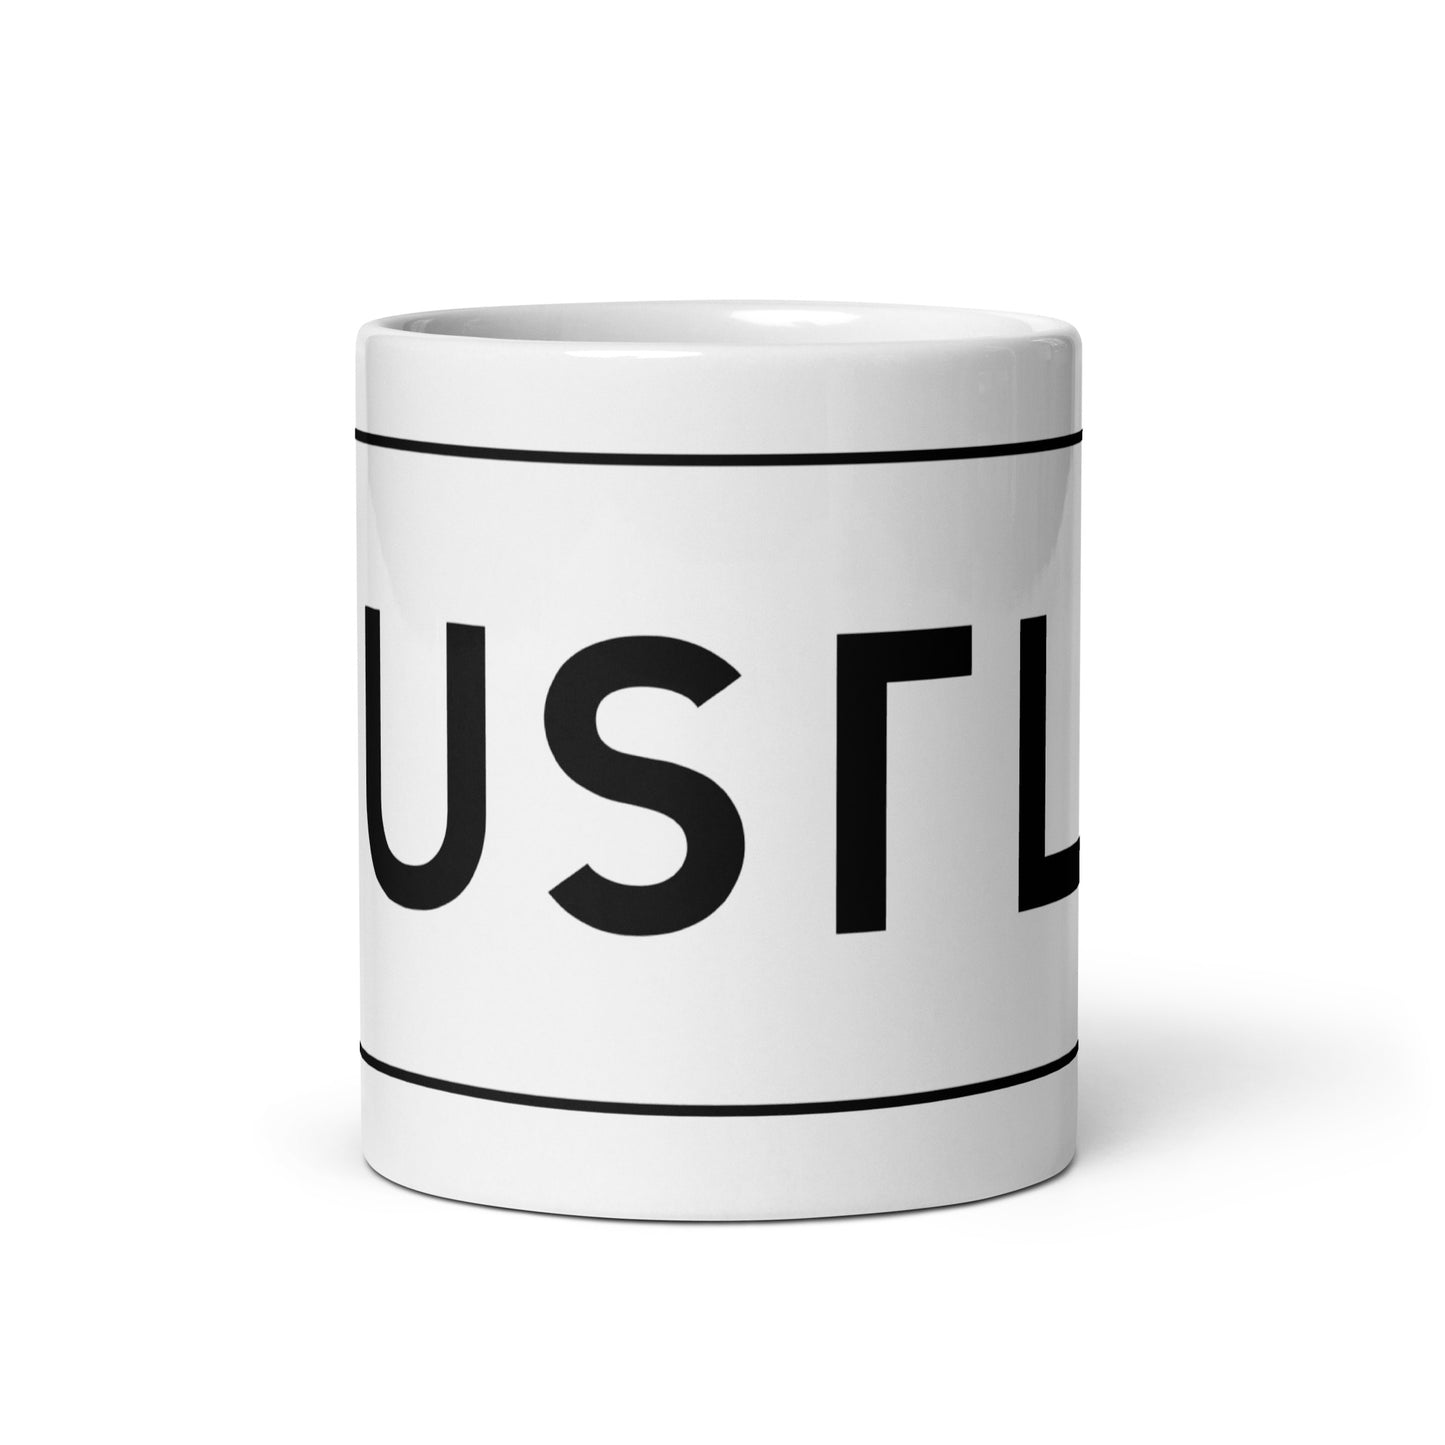 Hustle (v1) White glossy mug